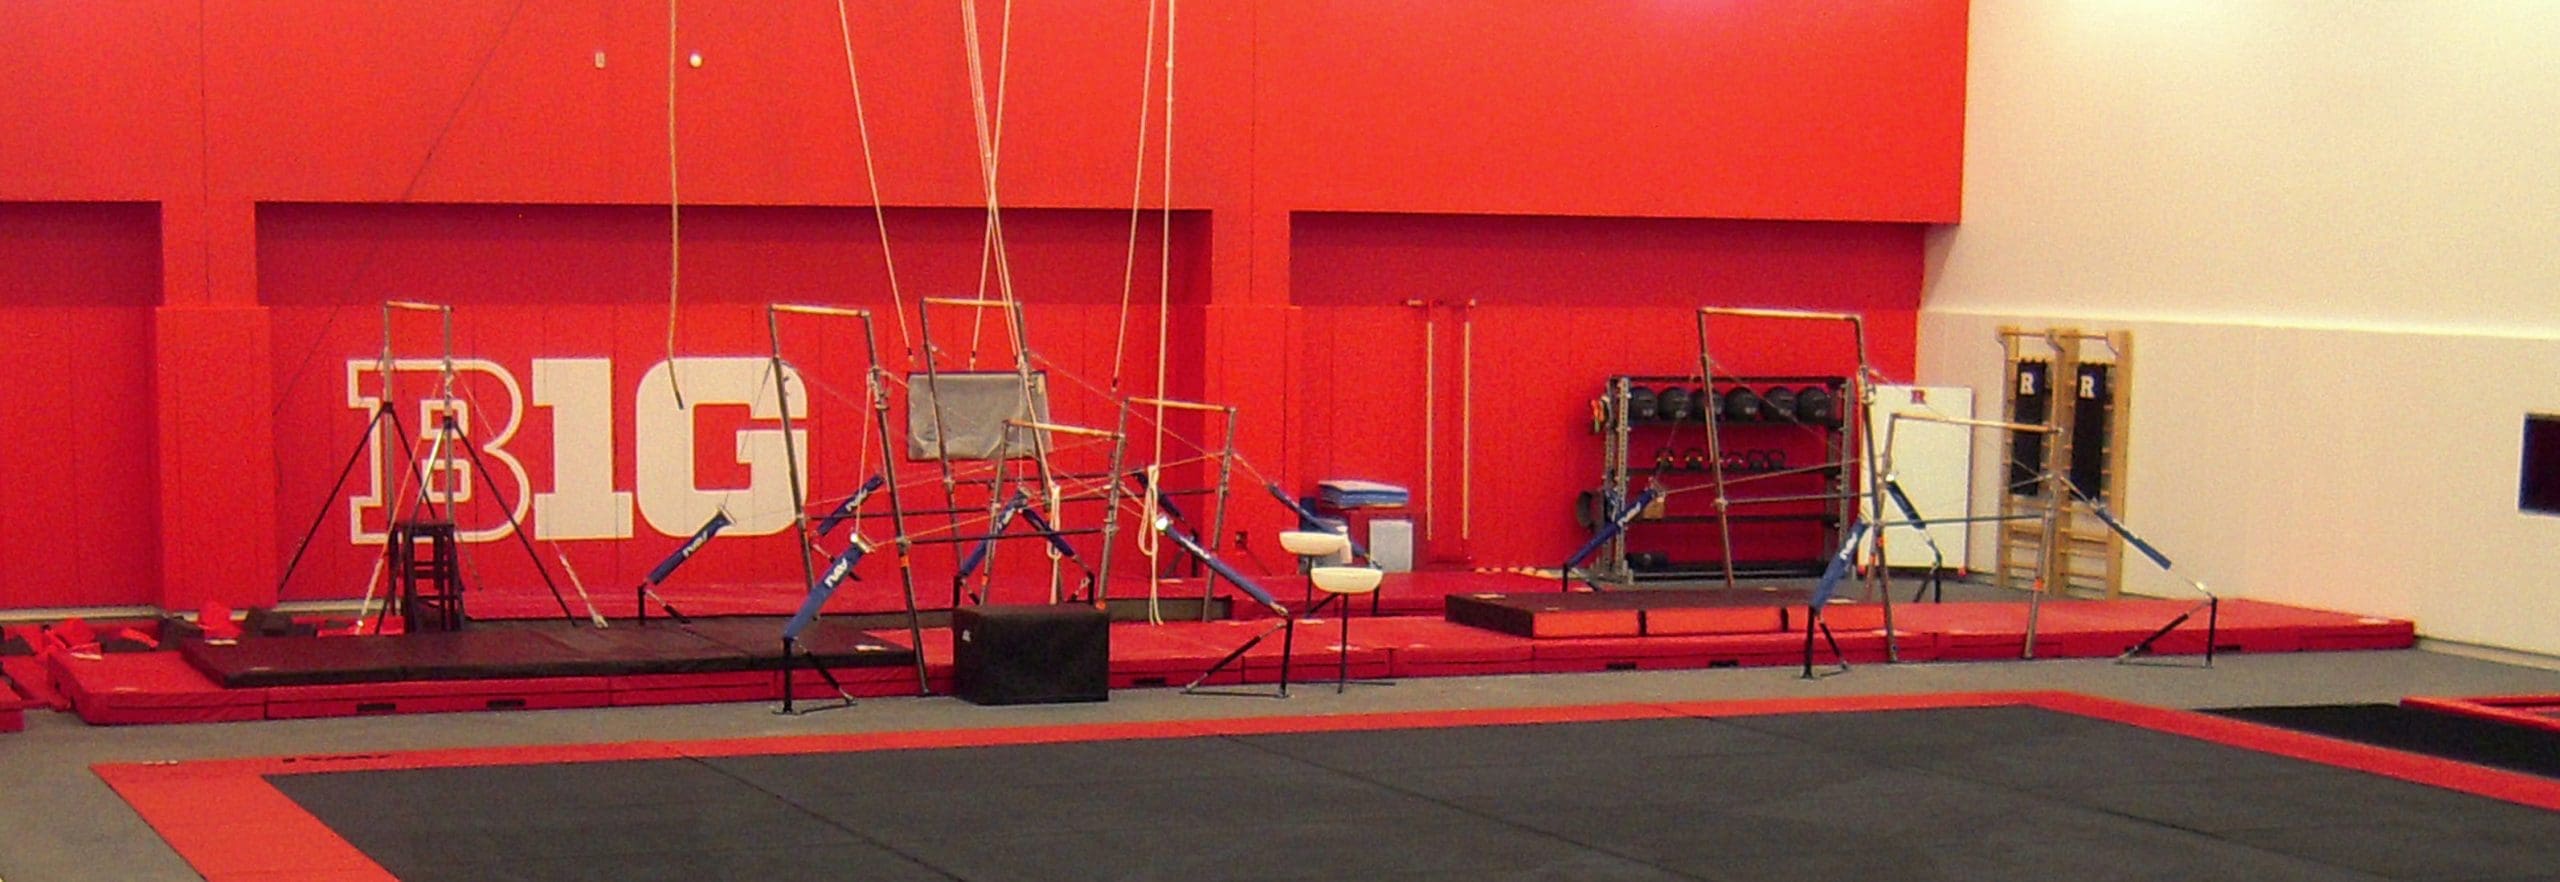 Rutgers Gymnastics beam & trampoline area. 